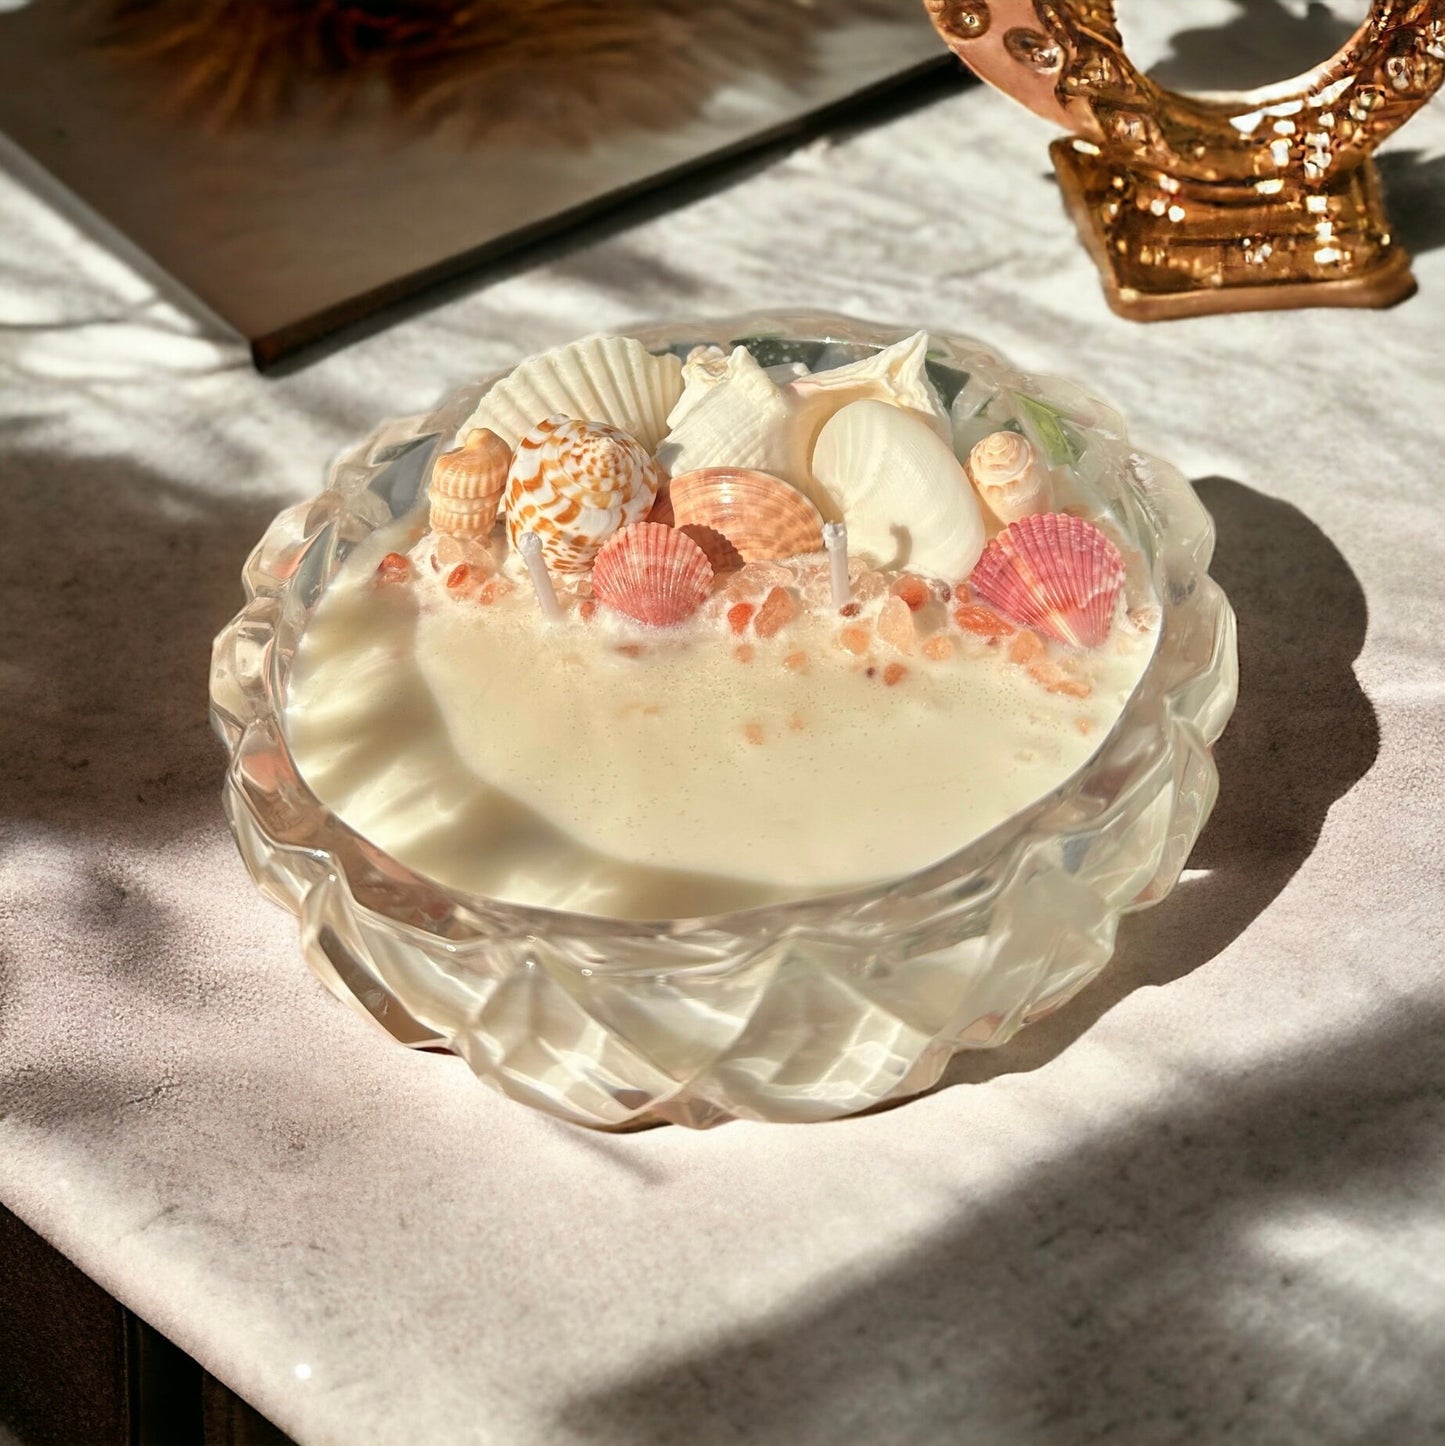 Vintage Glass Seashell Soy Candle| Brazilian BUM BUM Island Scented| Pink & White| Reusable| Beach Decor Boho| Tropical Coconut Girl Gift